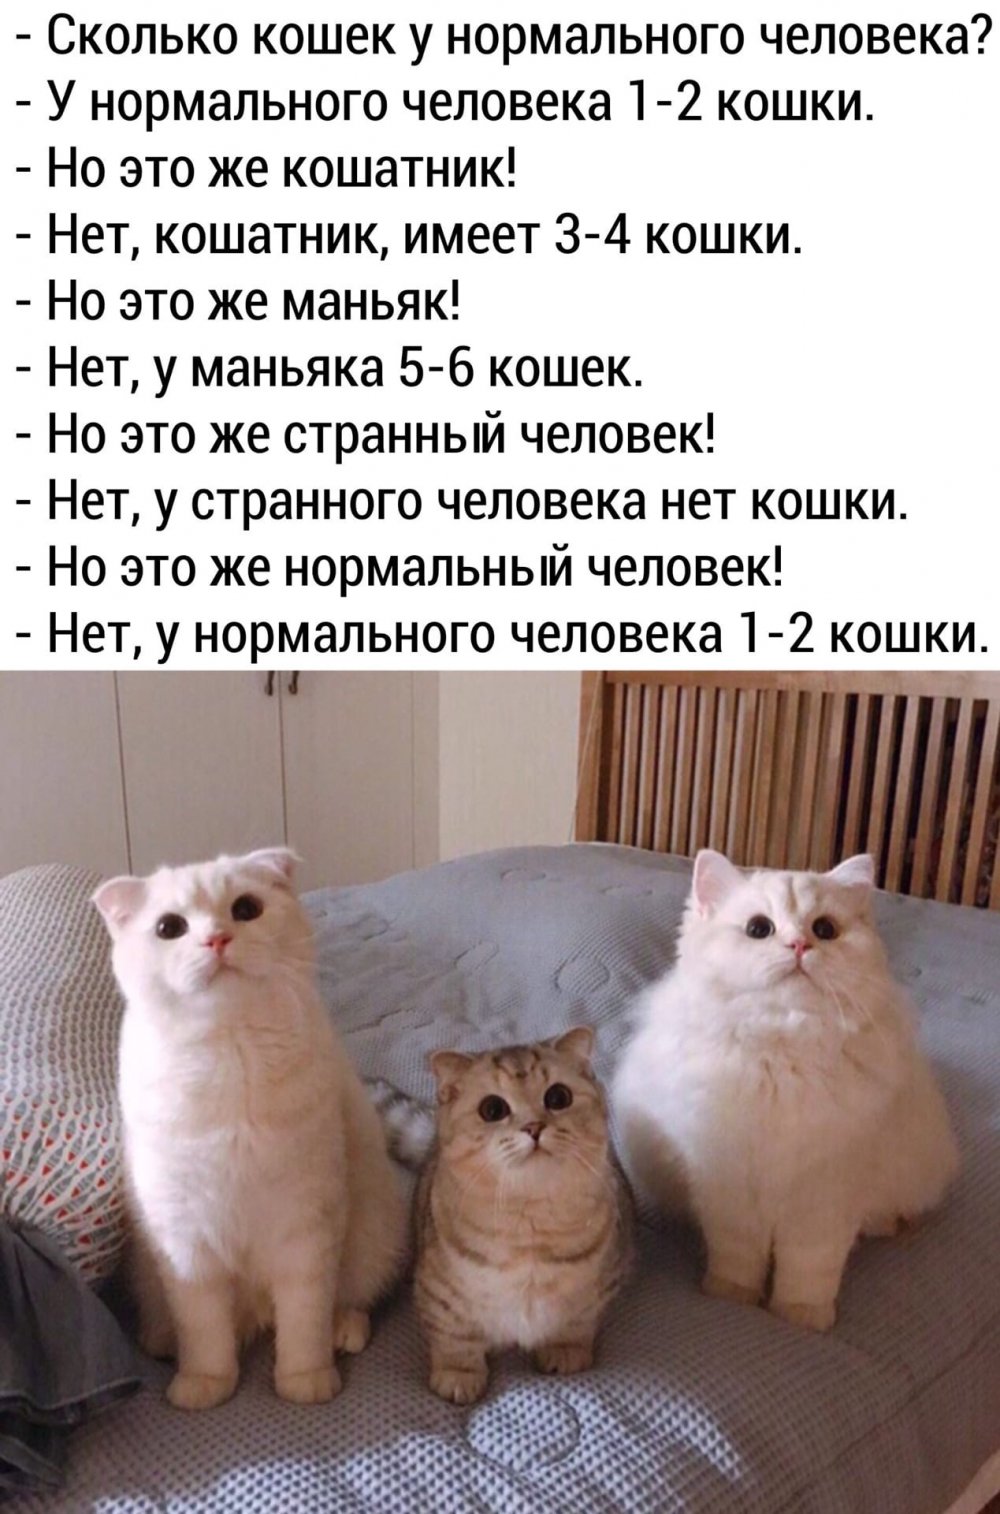 У нормального человека 1-2 кошки